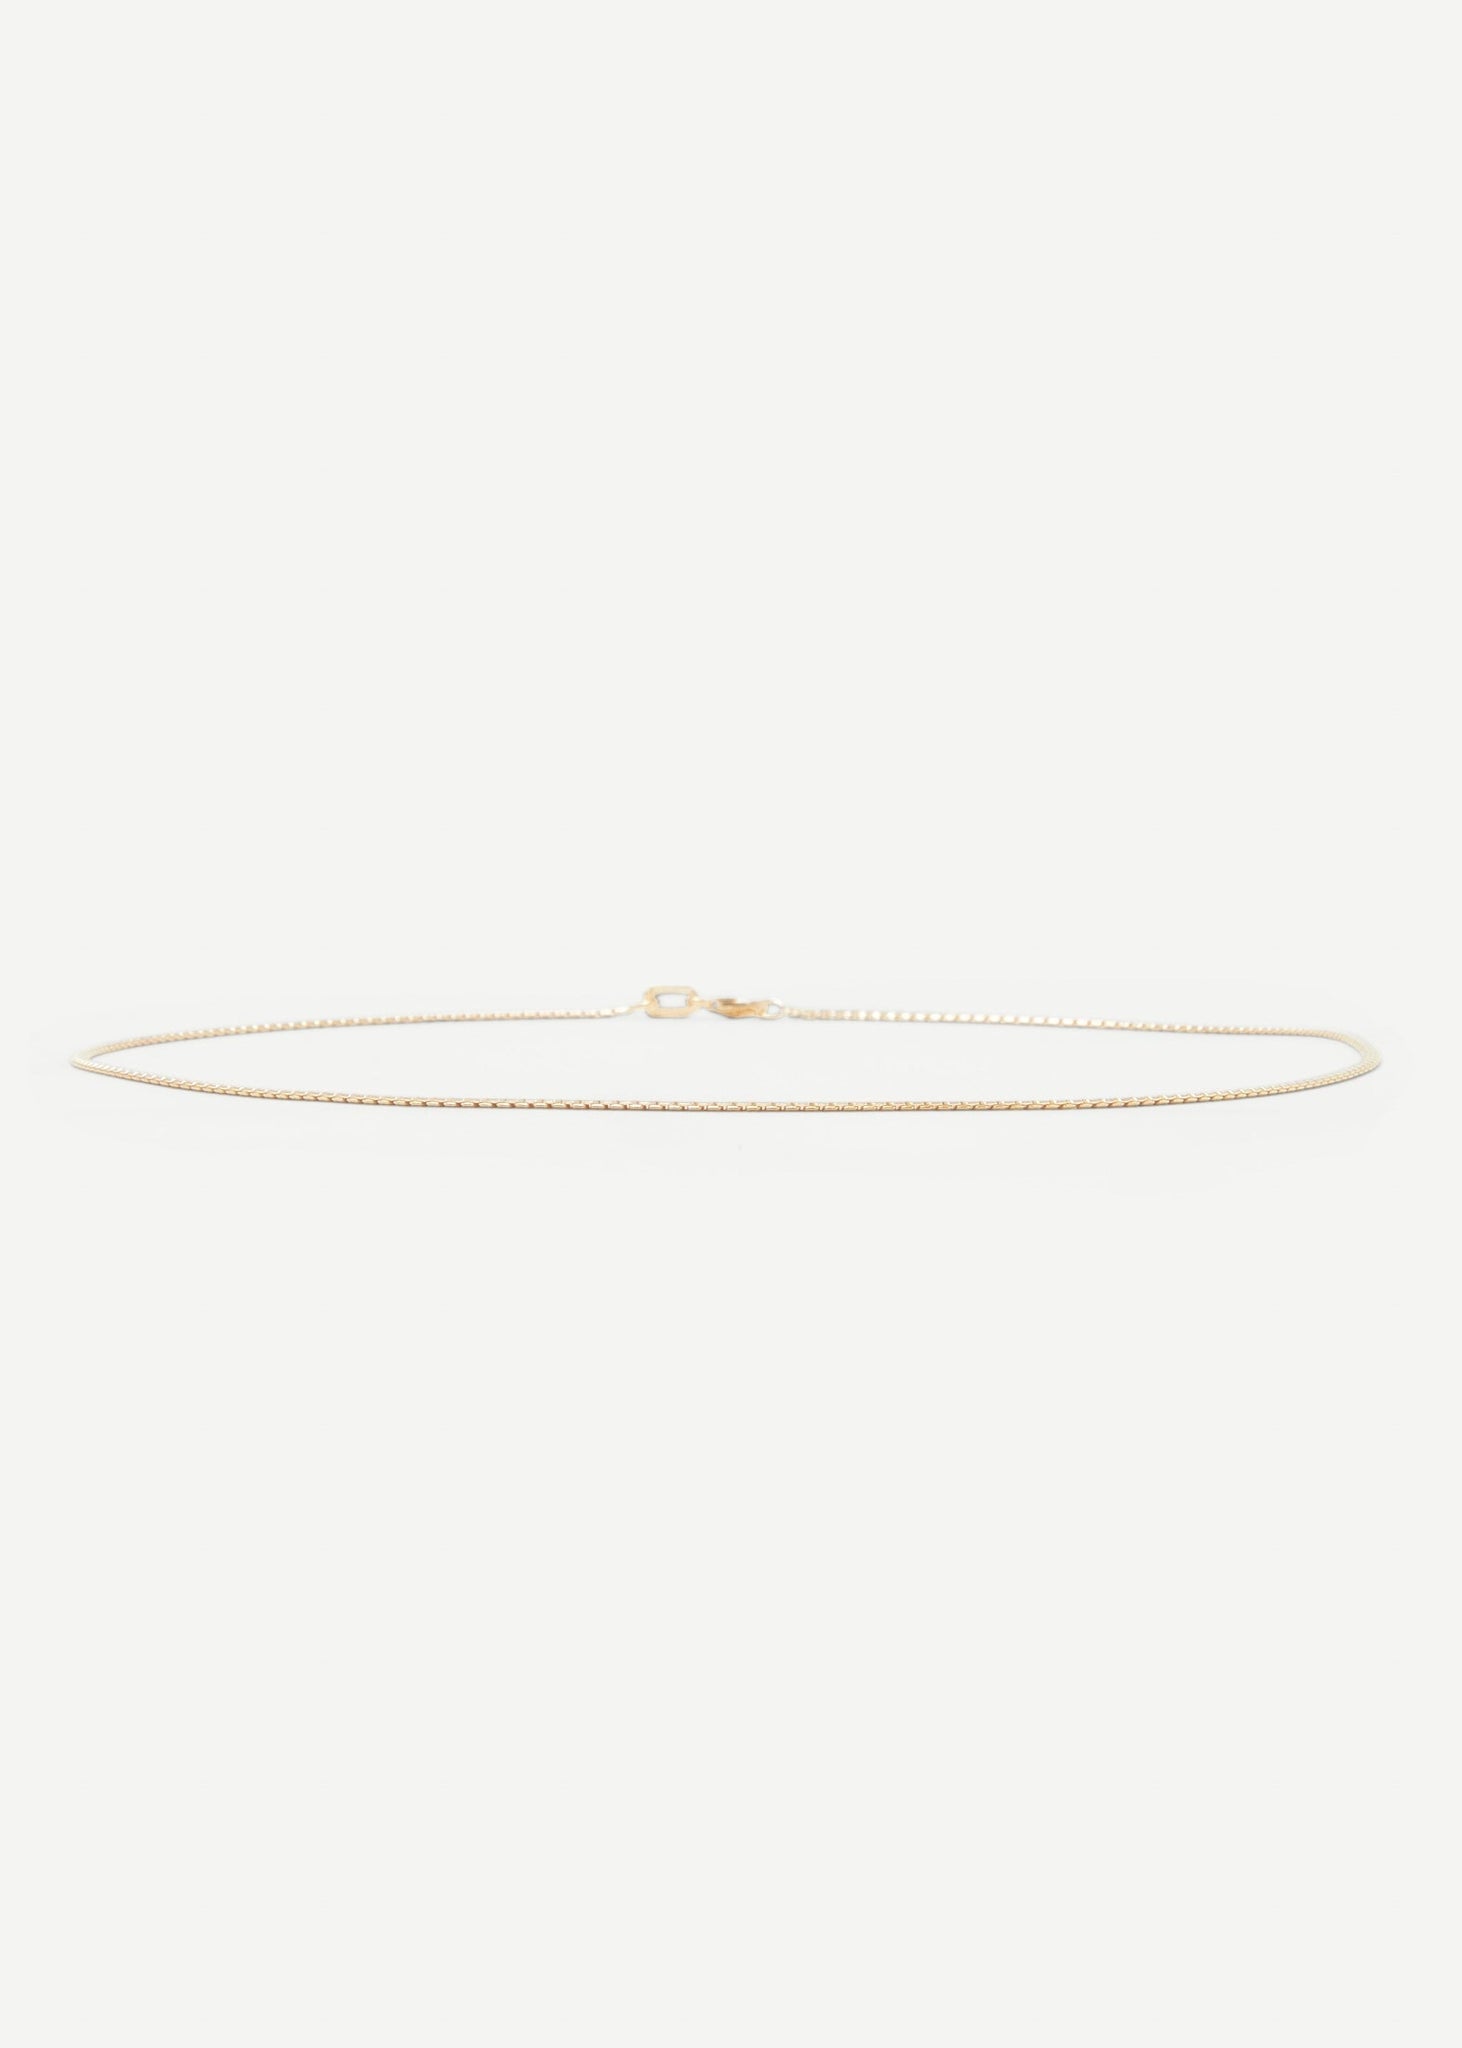 Stripped Zigzag Necklace Mini - Necklaces - Cornelia Webb - 2